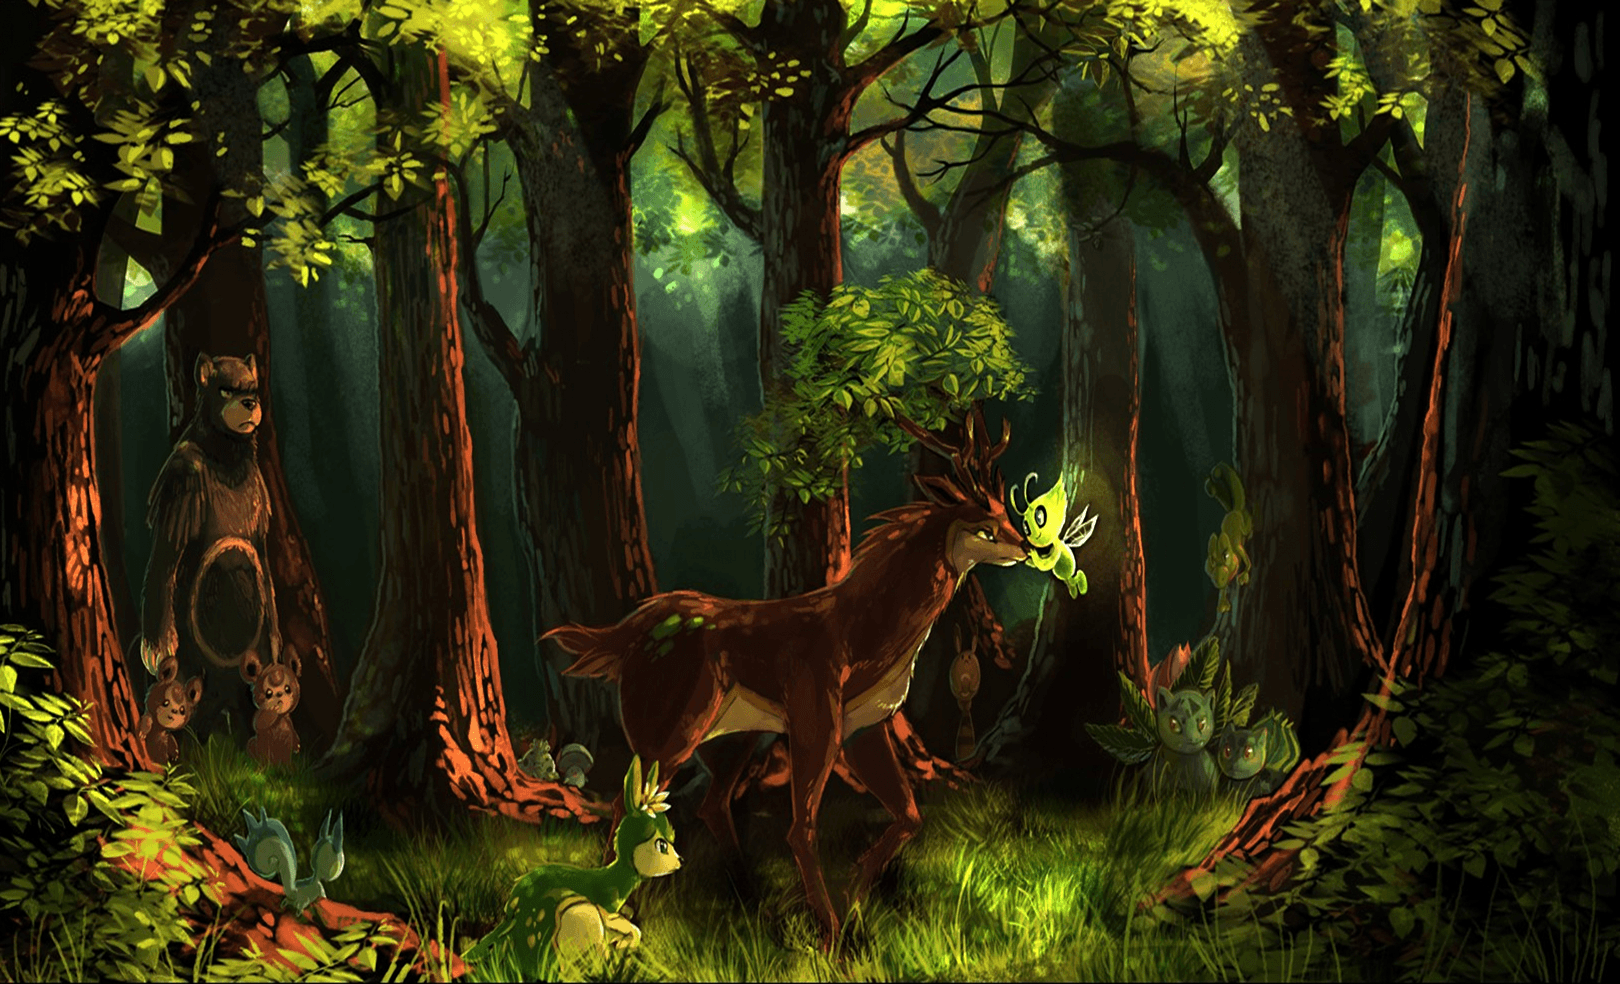 Grass Pokemon Wallpaper and Background Imagex984